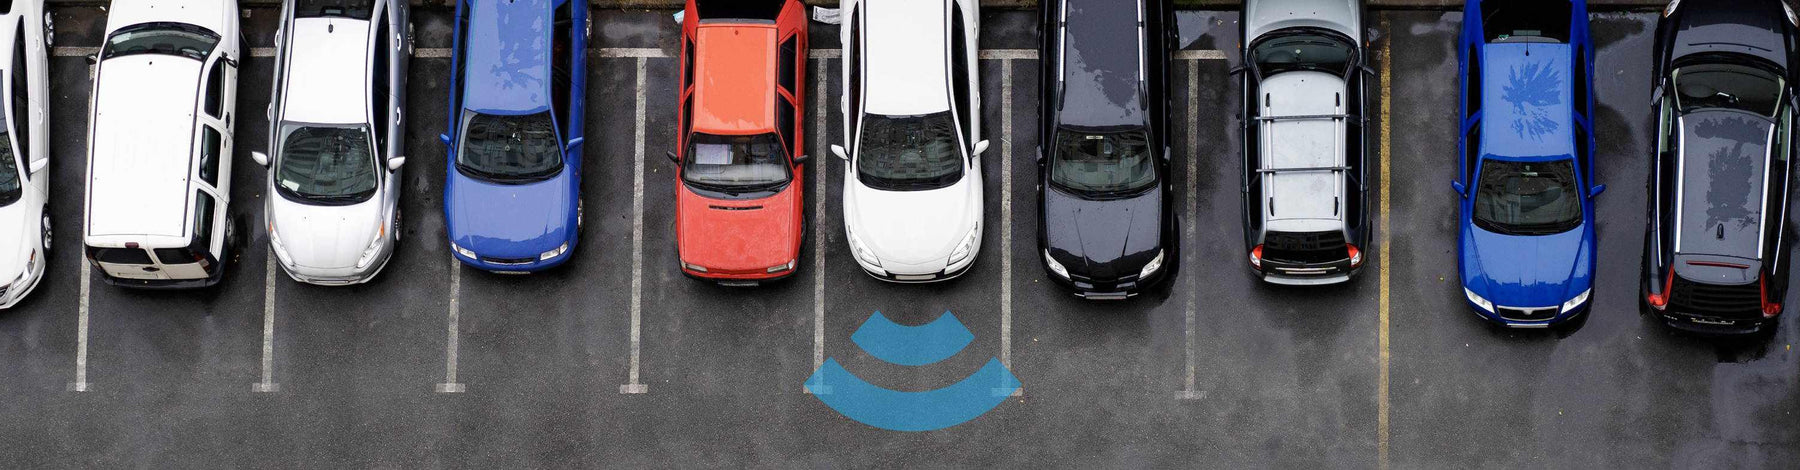 Park Safer and Smarter with AI-Powered Parking Mode Dash Cams! - - BlackboxMyCar Canada